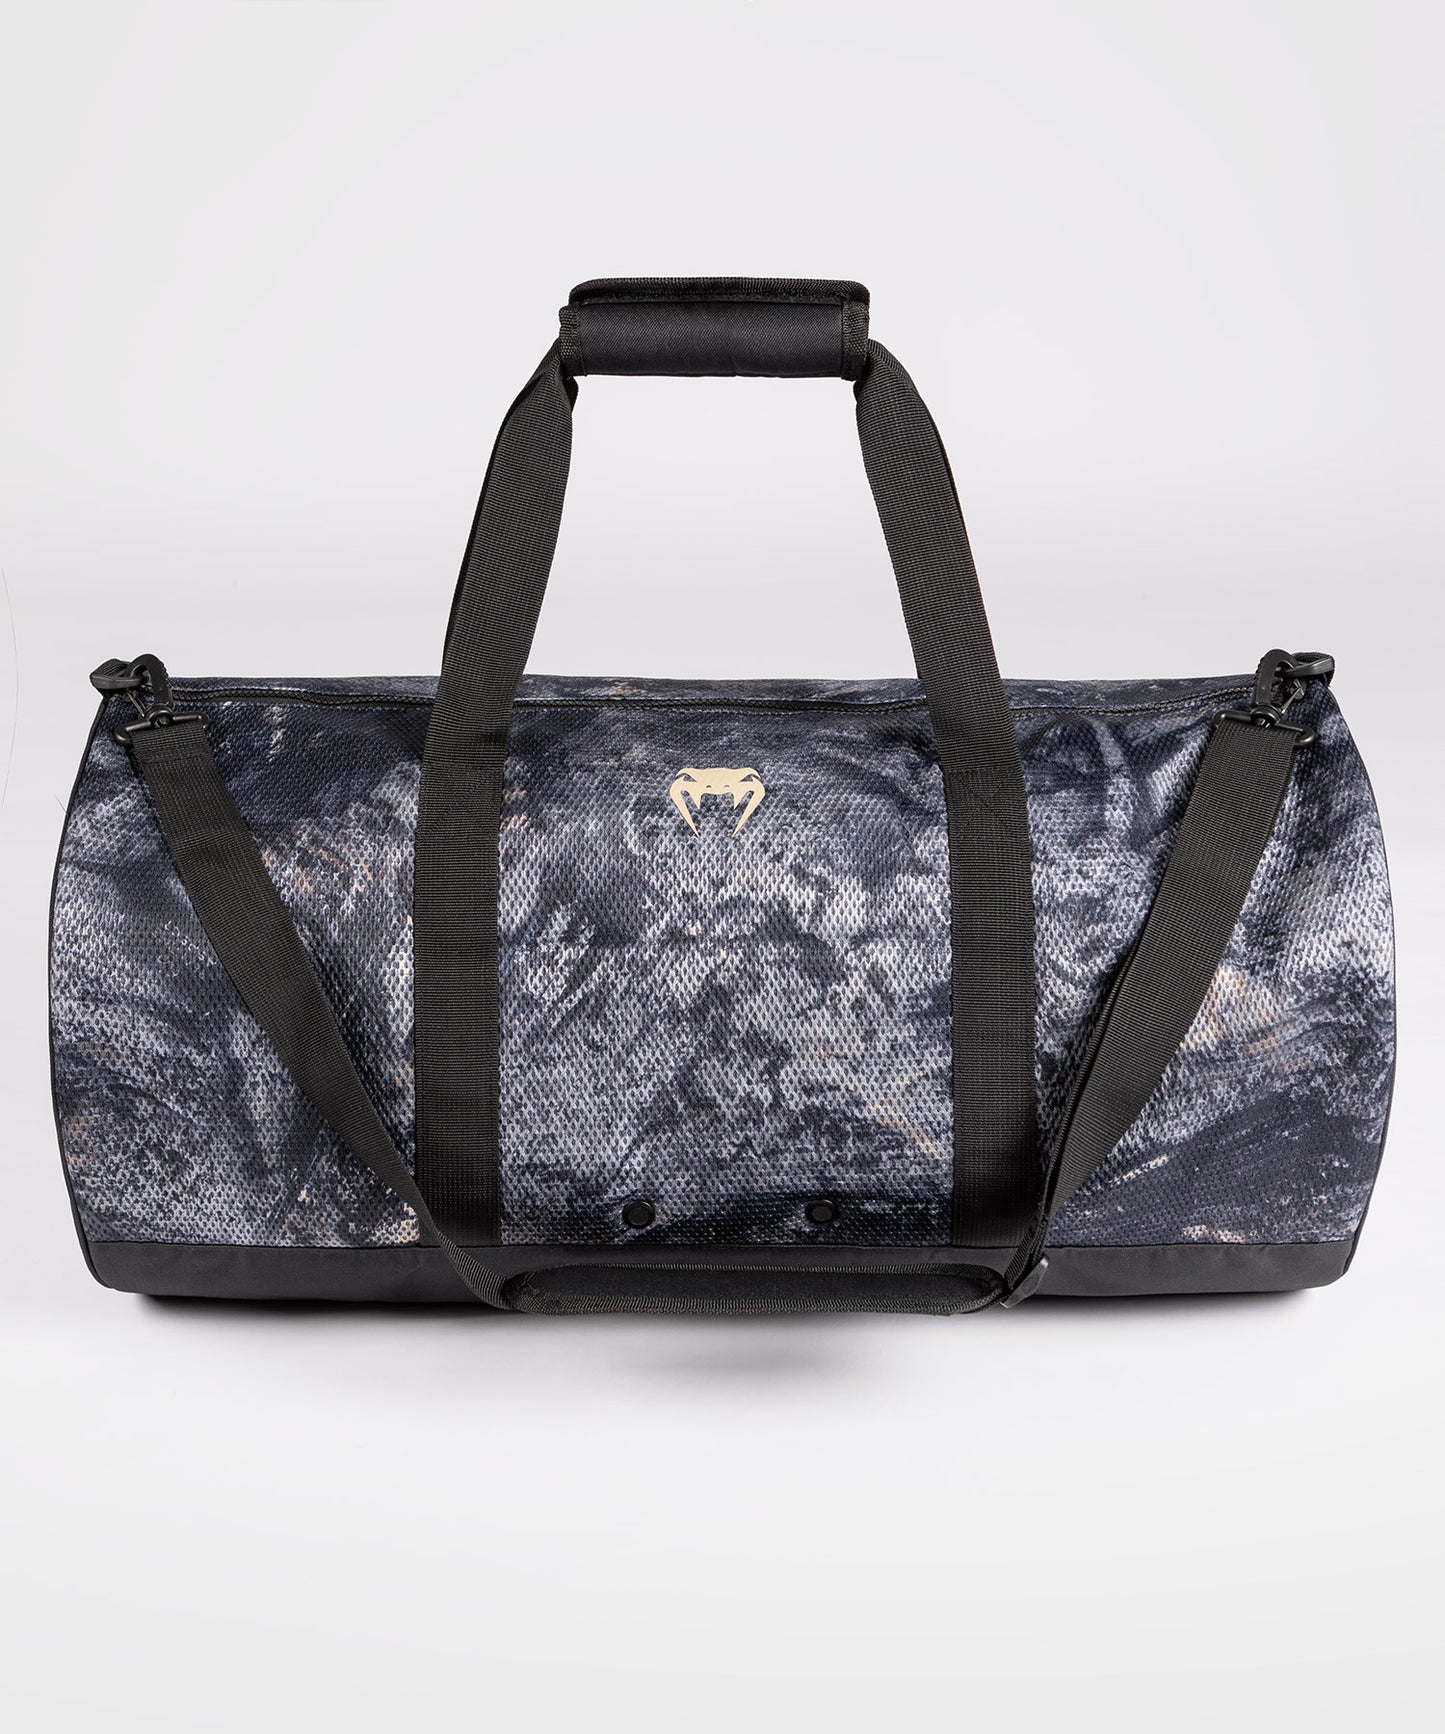 Venum Laser XT Realtree Duffle Bag - Dark Camo/Grey